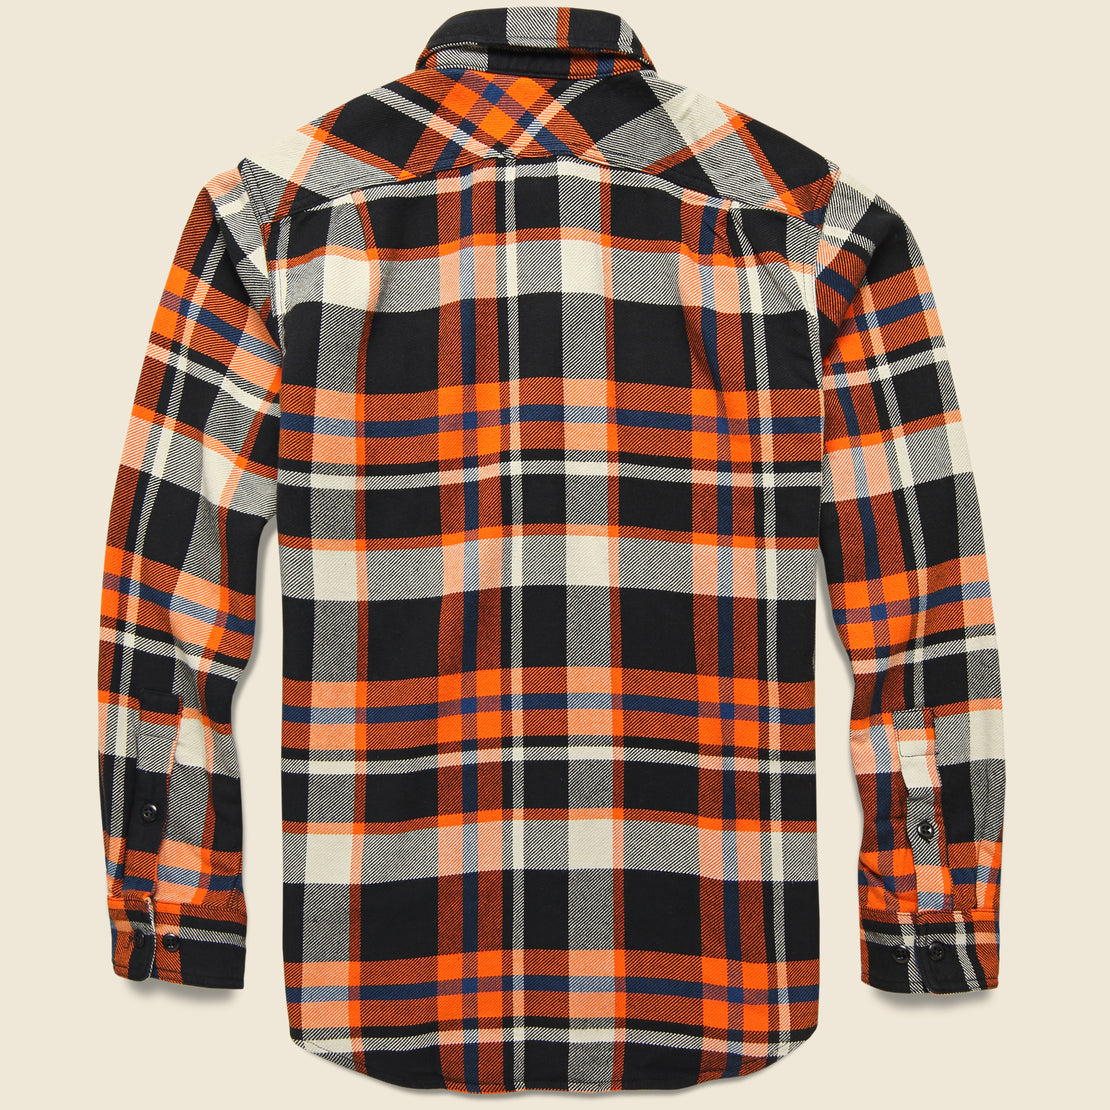 Vintage Flannel Workshirt - Orange/Black - Filson - STAG Provisions - Tops - L/S Woven - Plaid